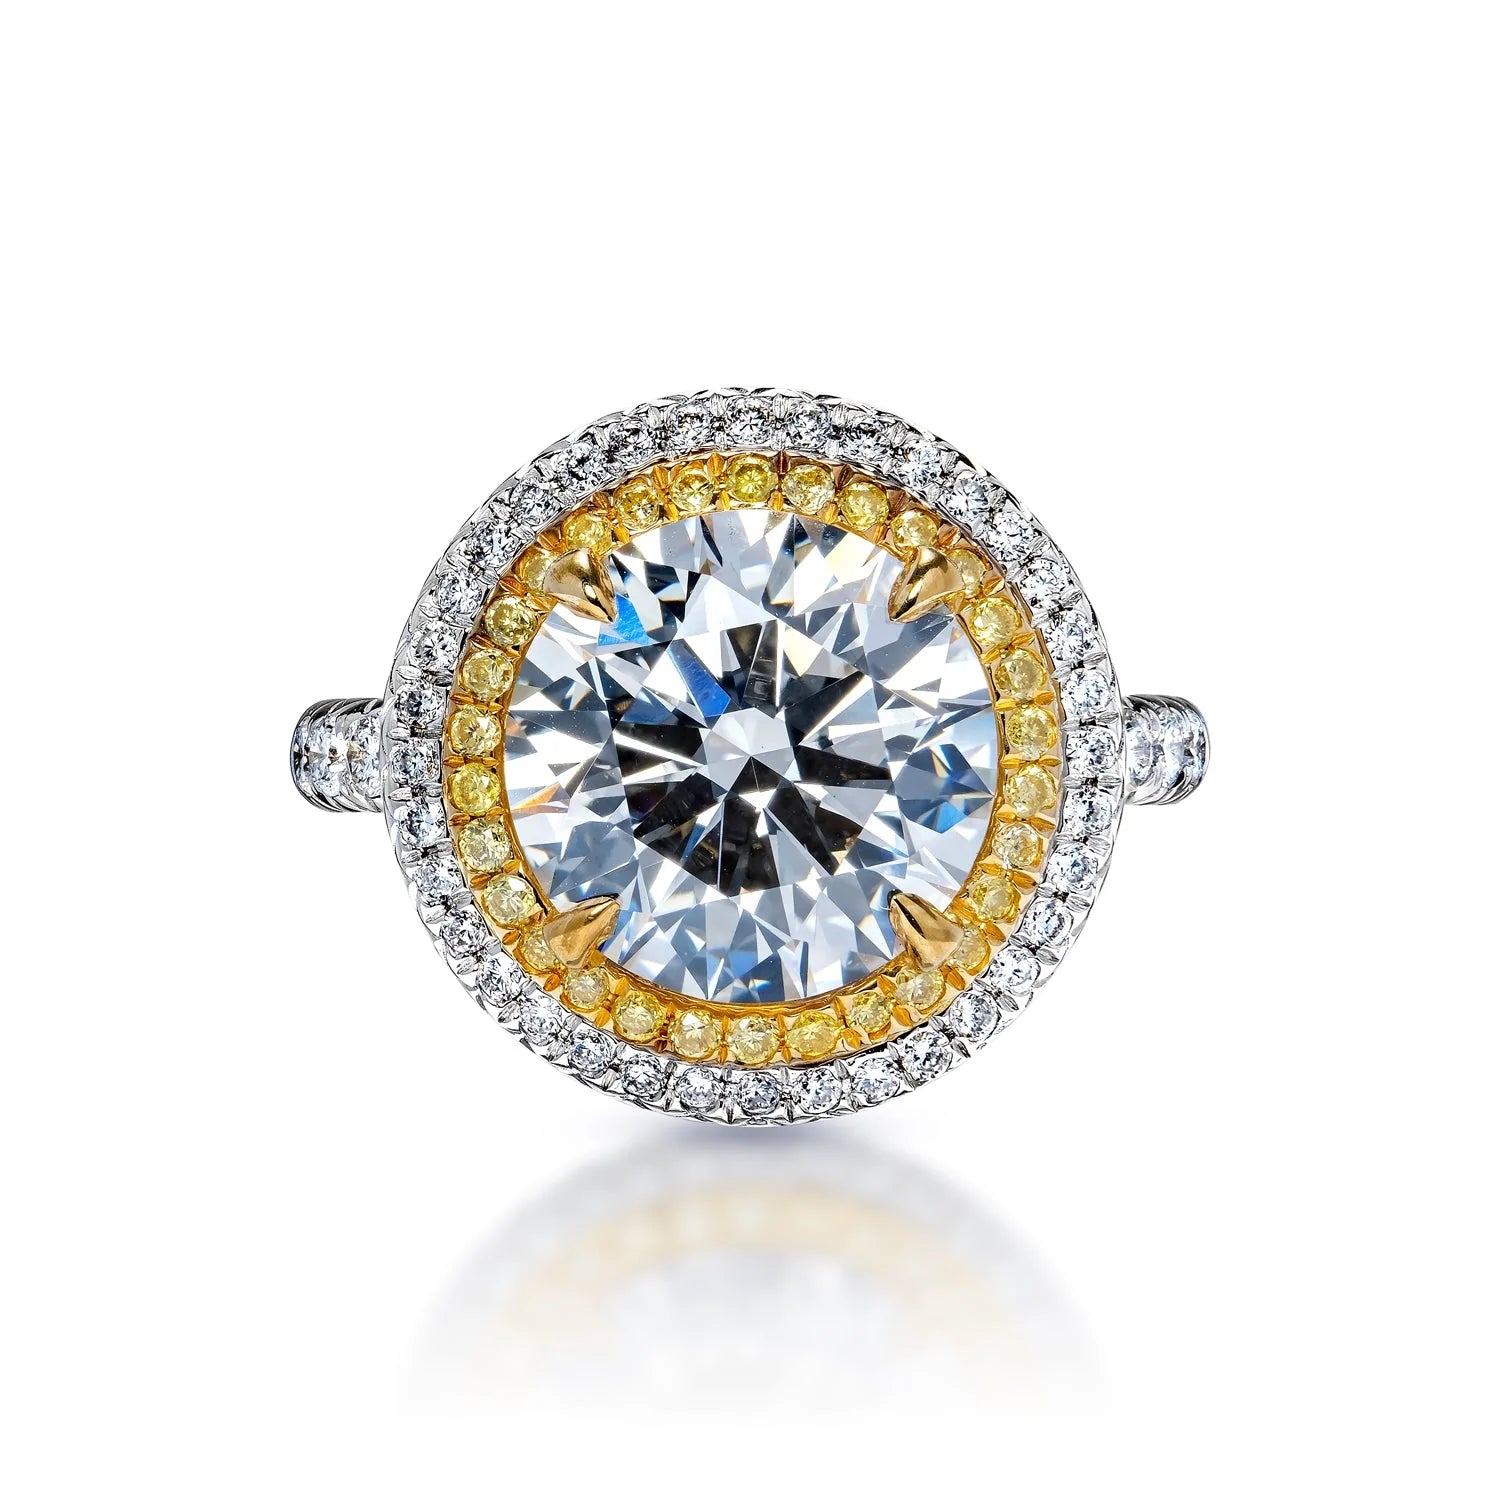 Lauryn 5 Carat H VS1 Round Brilliant Lab Grown Diamond Engagement Ring in 18 Karat White Gold Front View